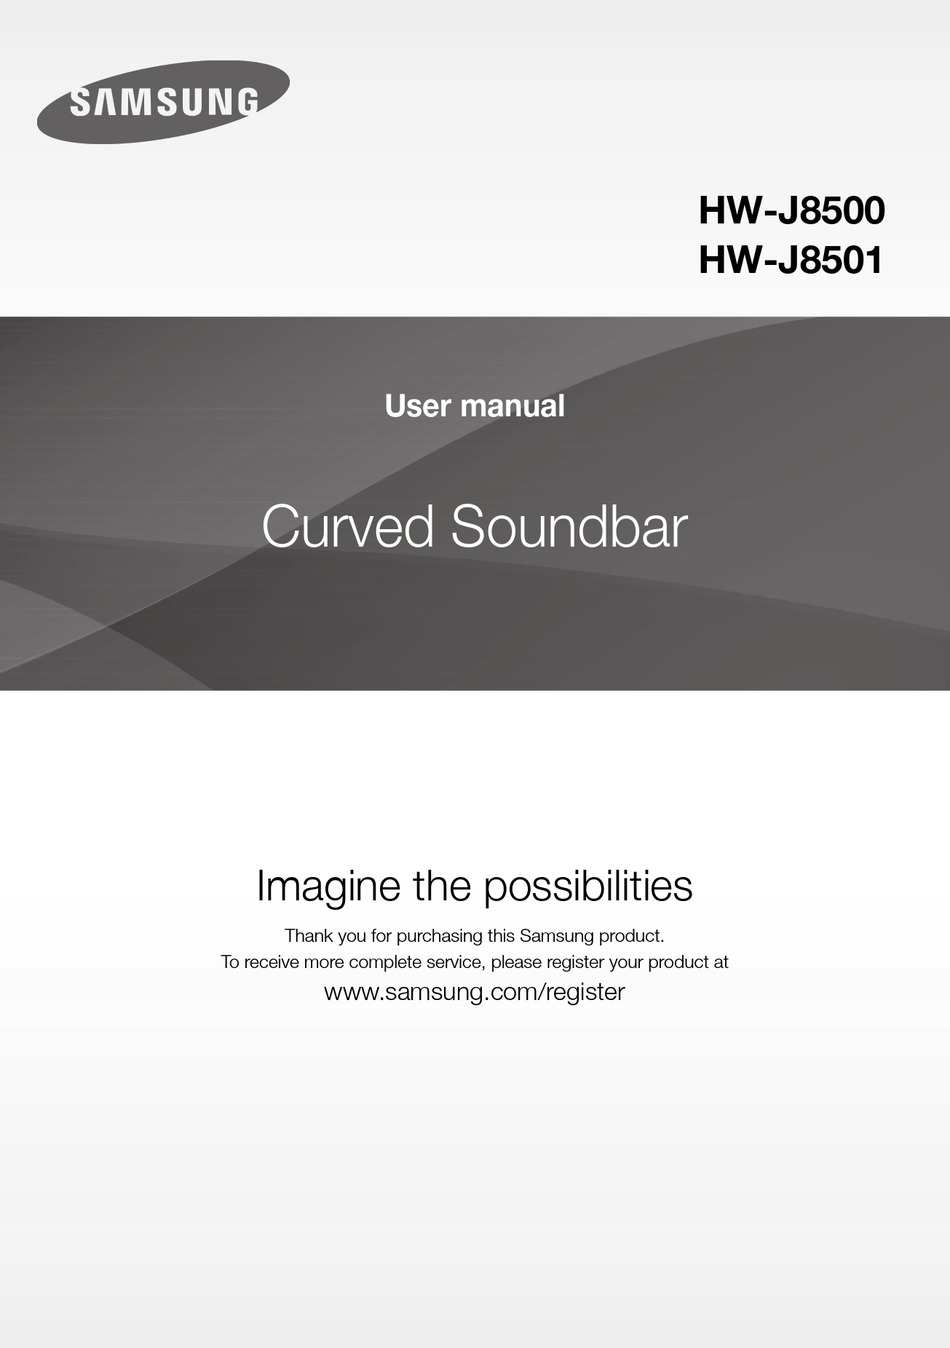 SAMSUNG HW-J8500 USER MANUAL Pdf Download | ManualsLib